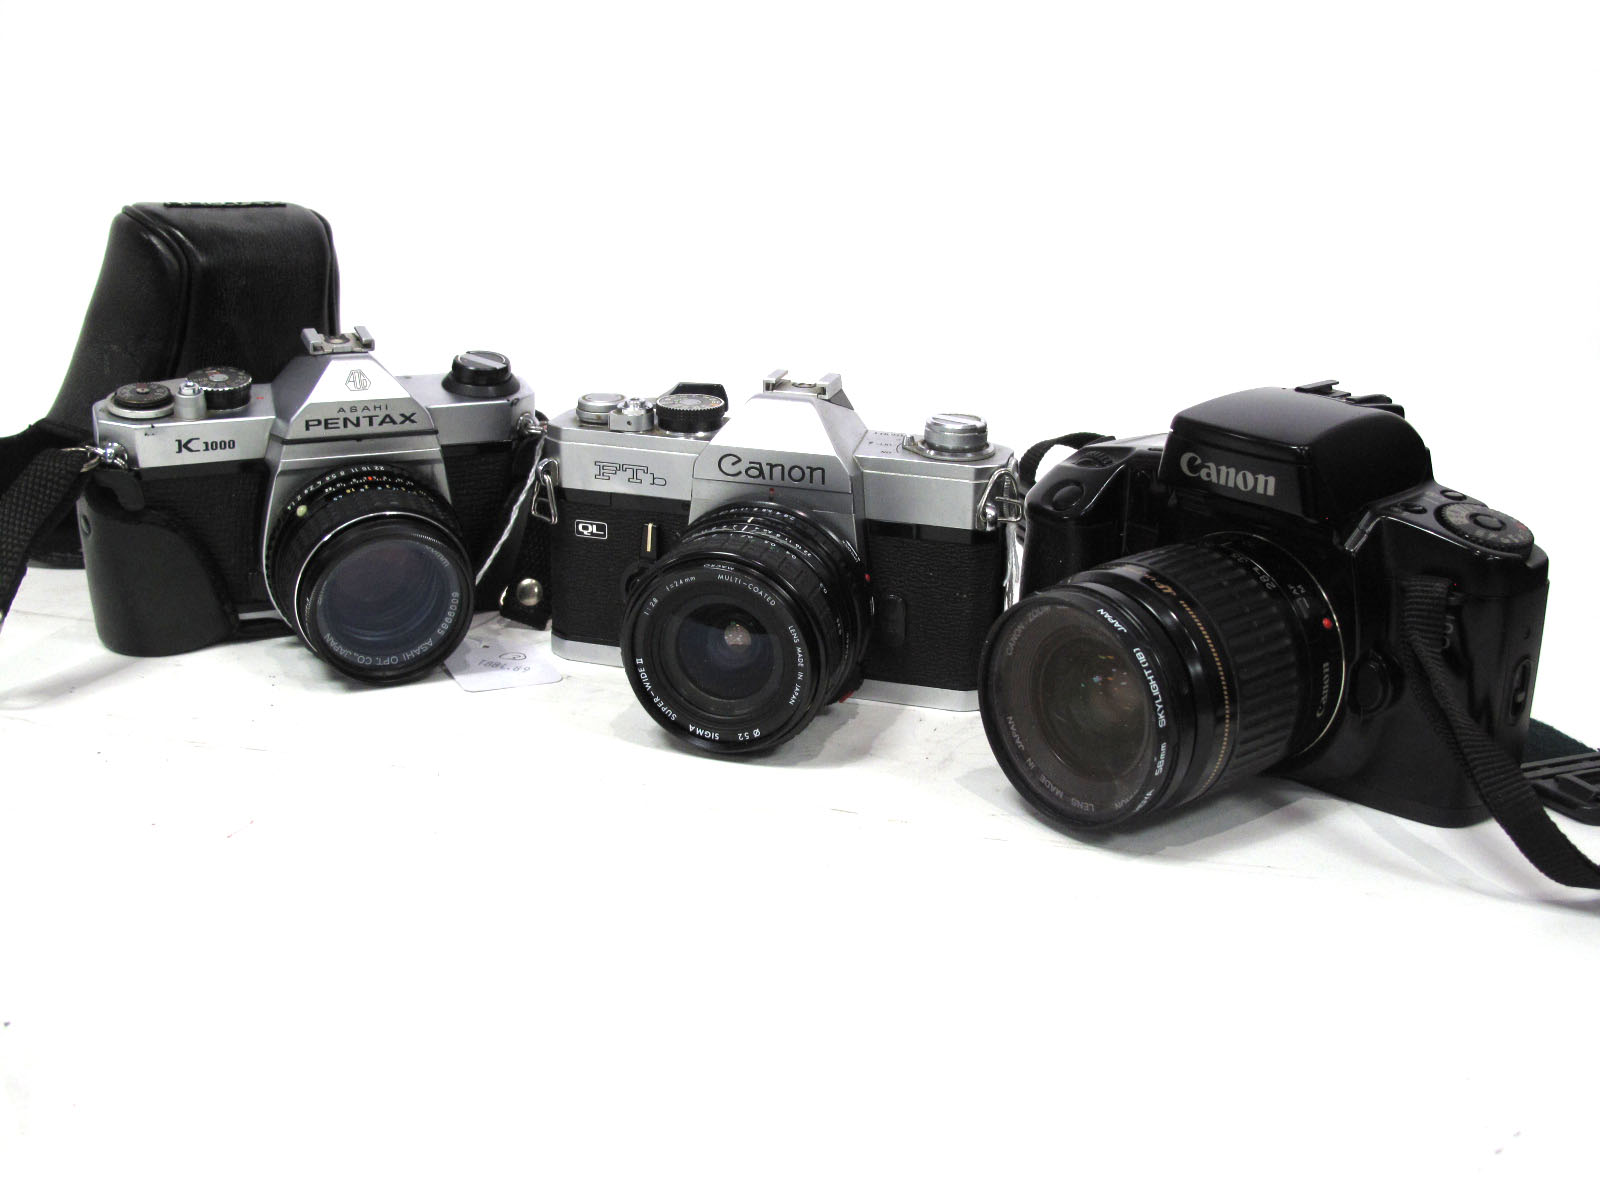 Pentax Asahi K1000, with SMC Pentax M 50mm lens, Canon FTb Camera with Sigma Super-Wide Z, f=24mm